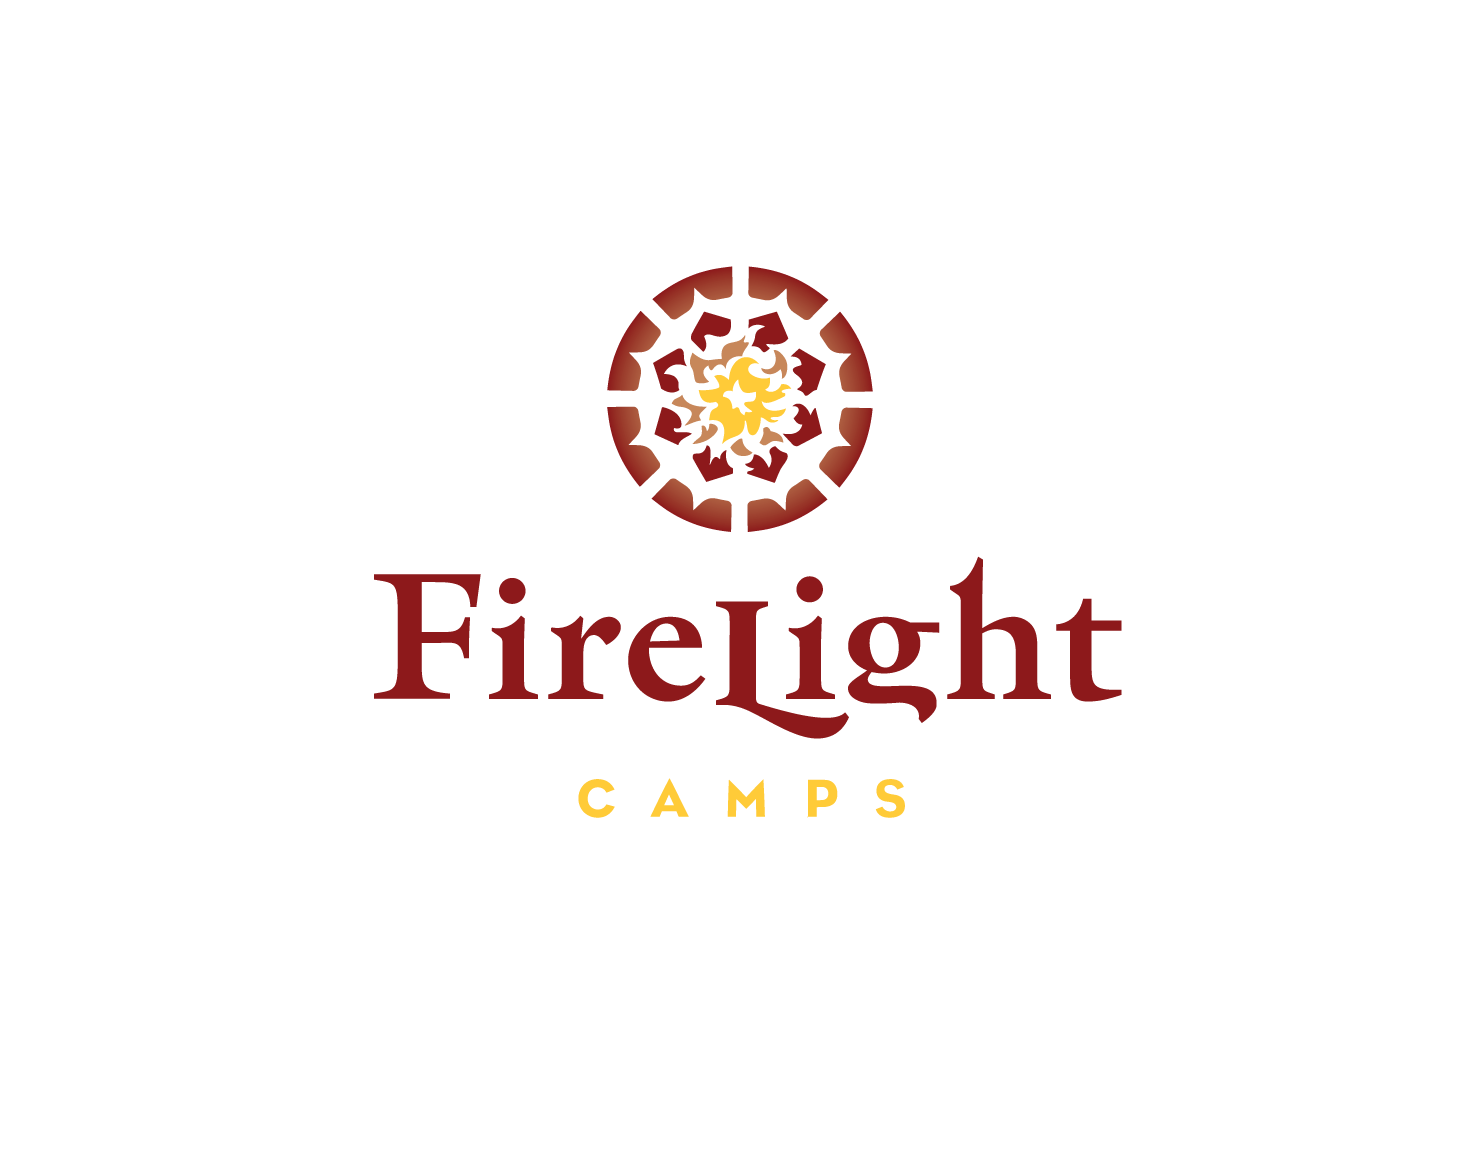 Firelight Camps